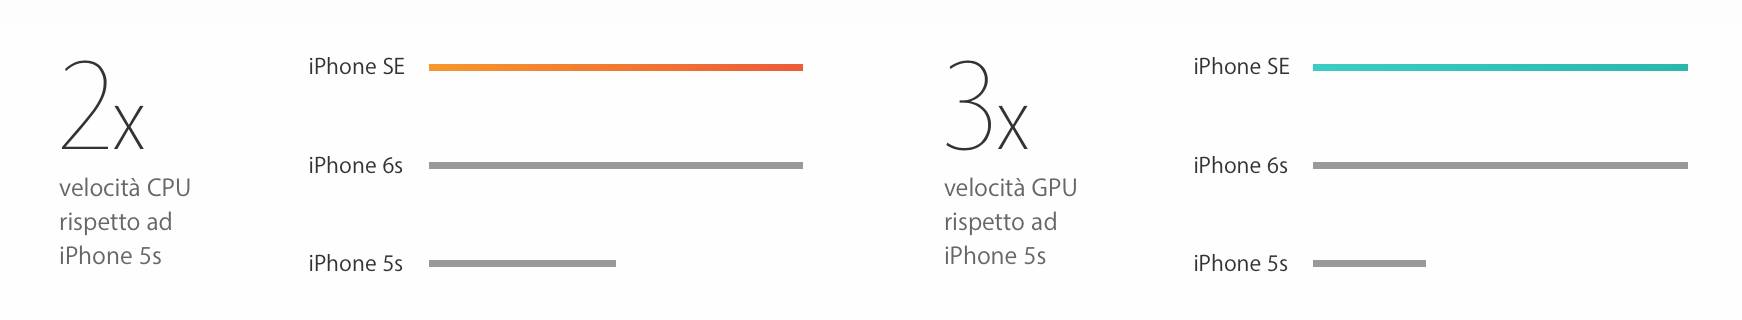 iPhone SE Stats